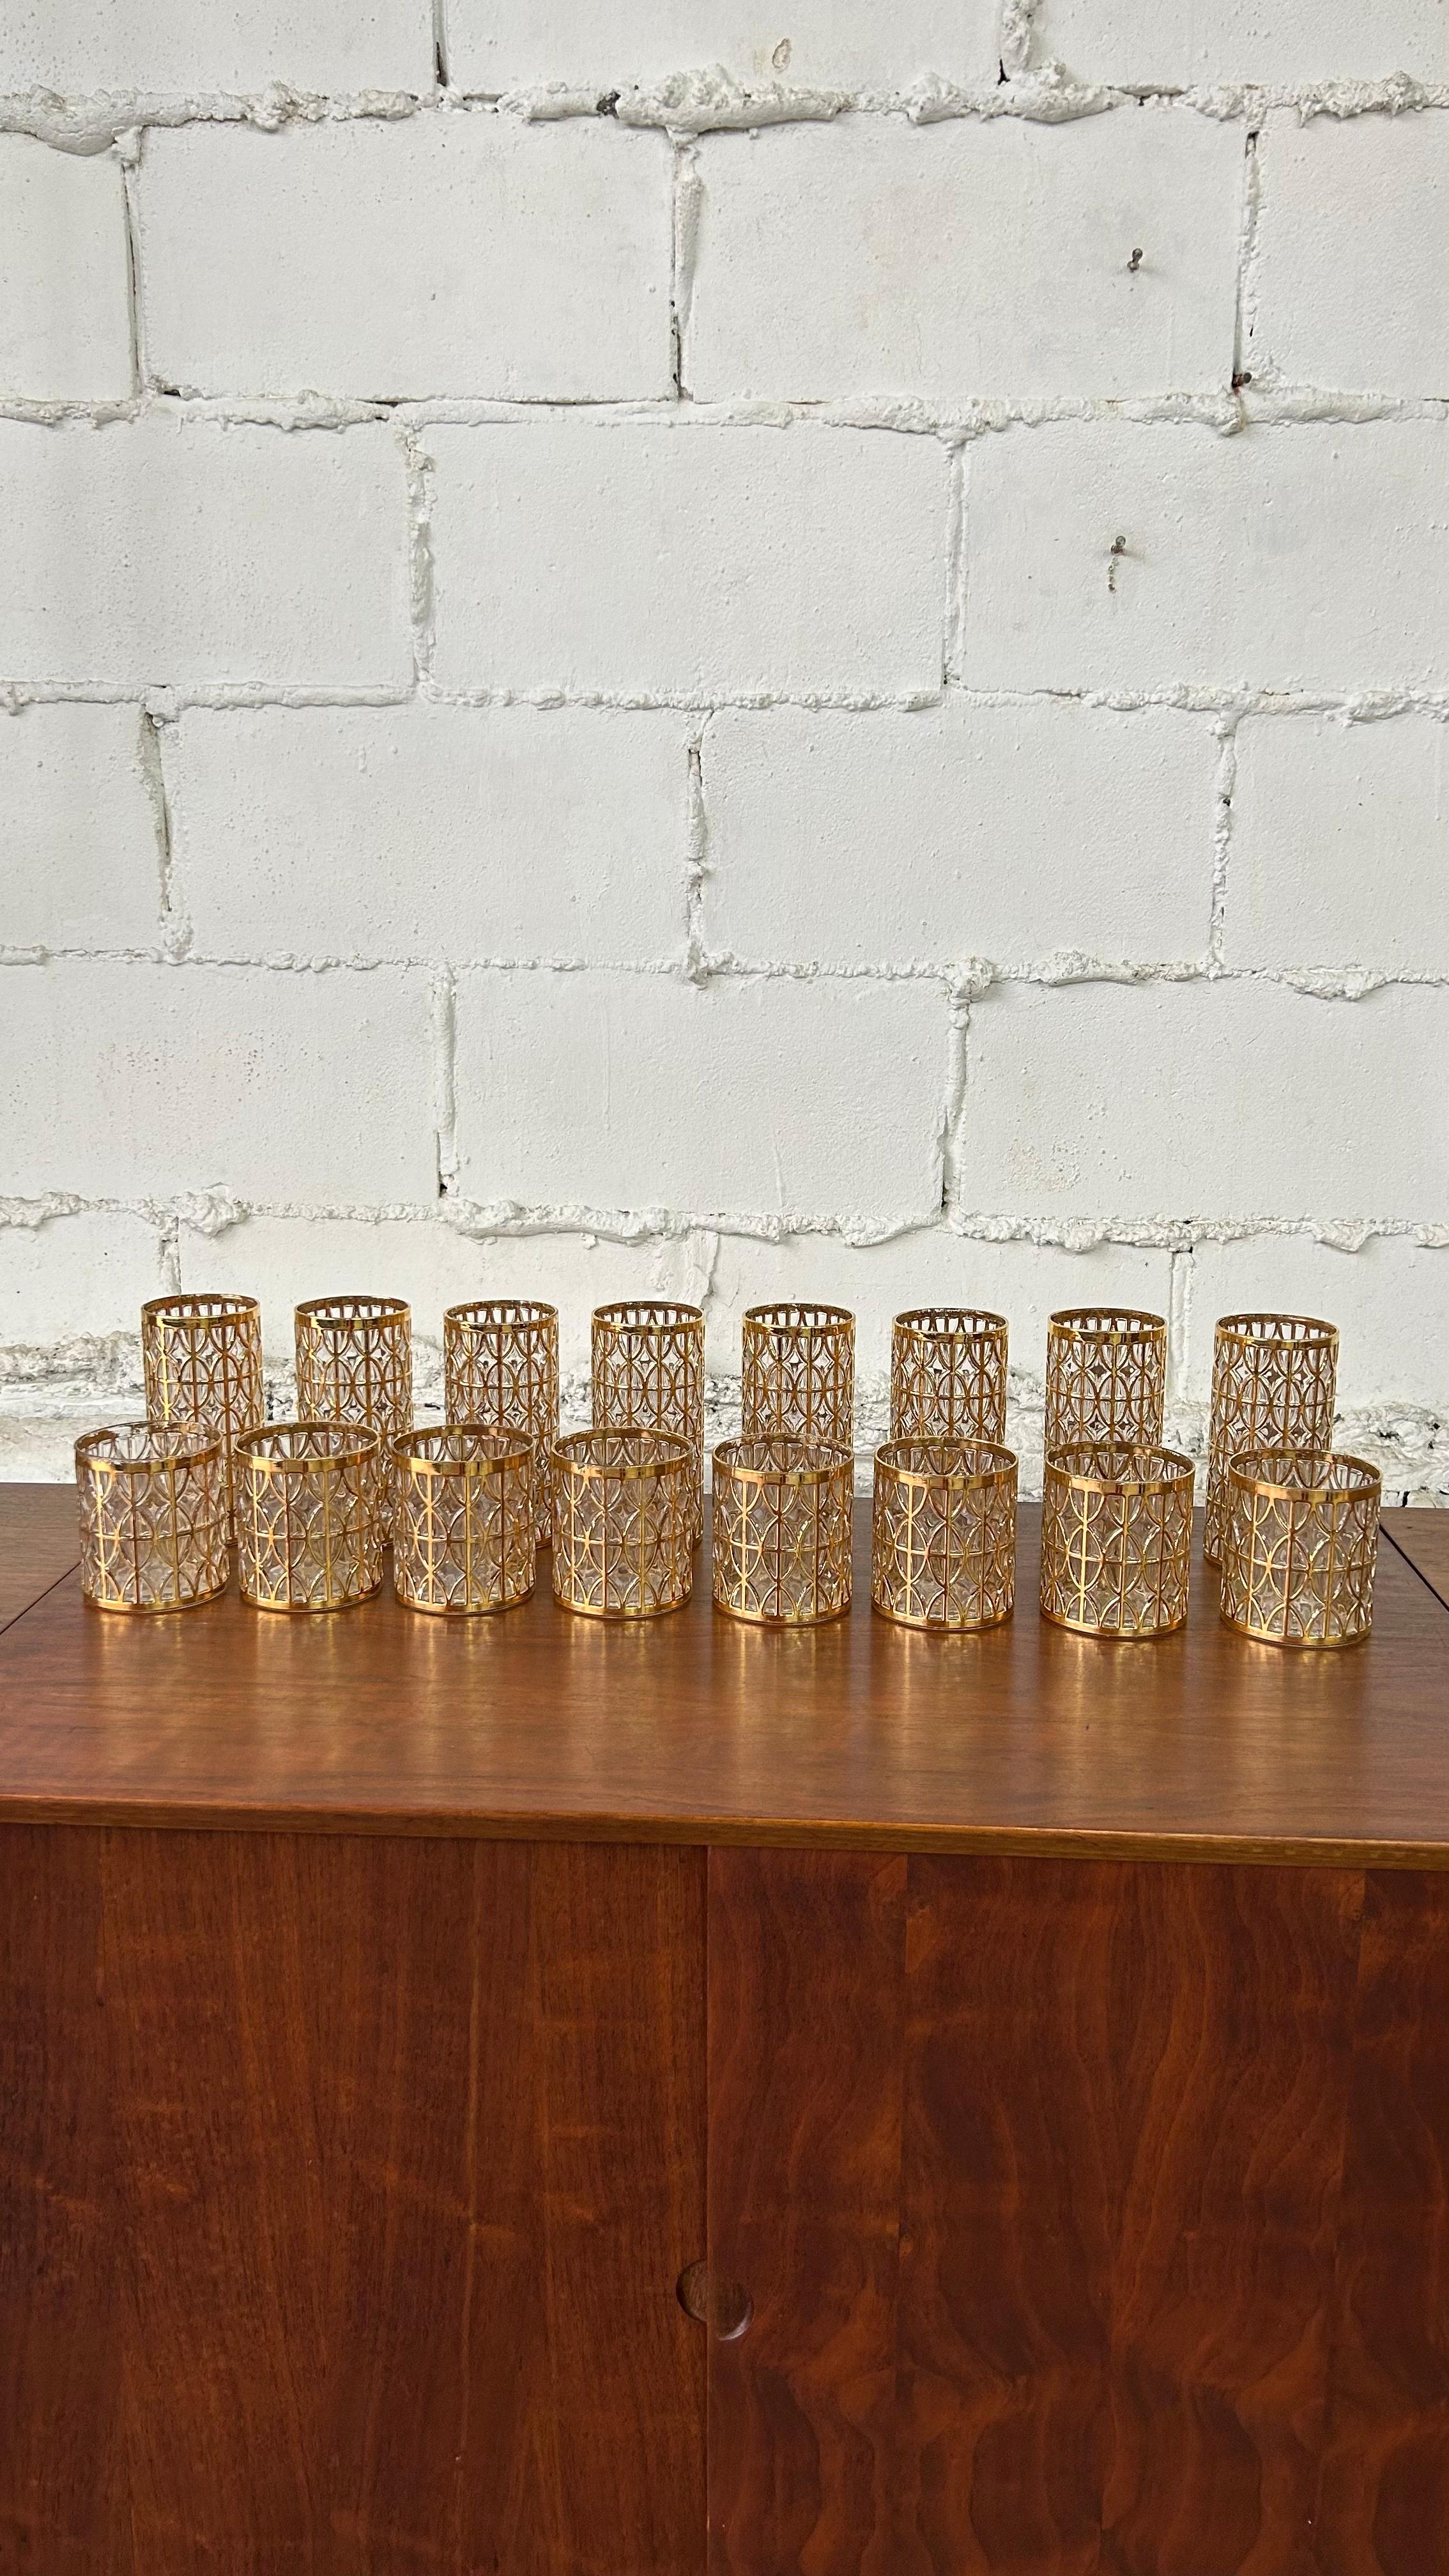 Hand-Painted 22k Gold Imperial Shoji Glassware Barware set of 16 1960s Hollywood Regency For Sale